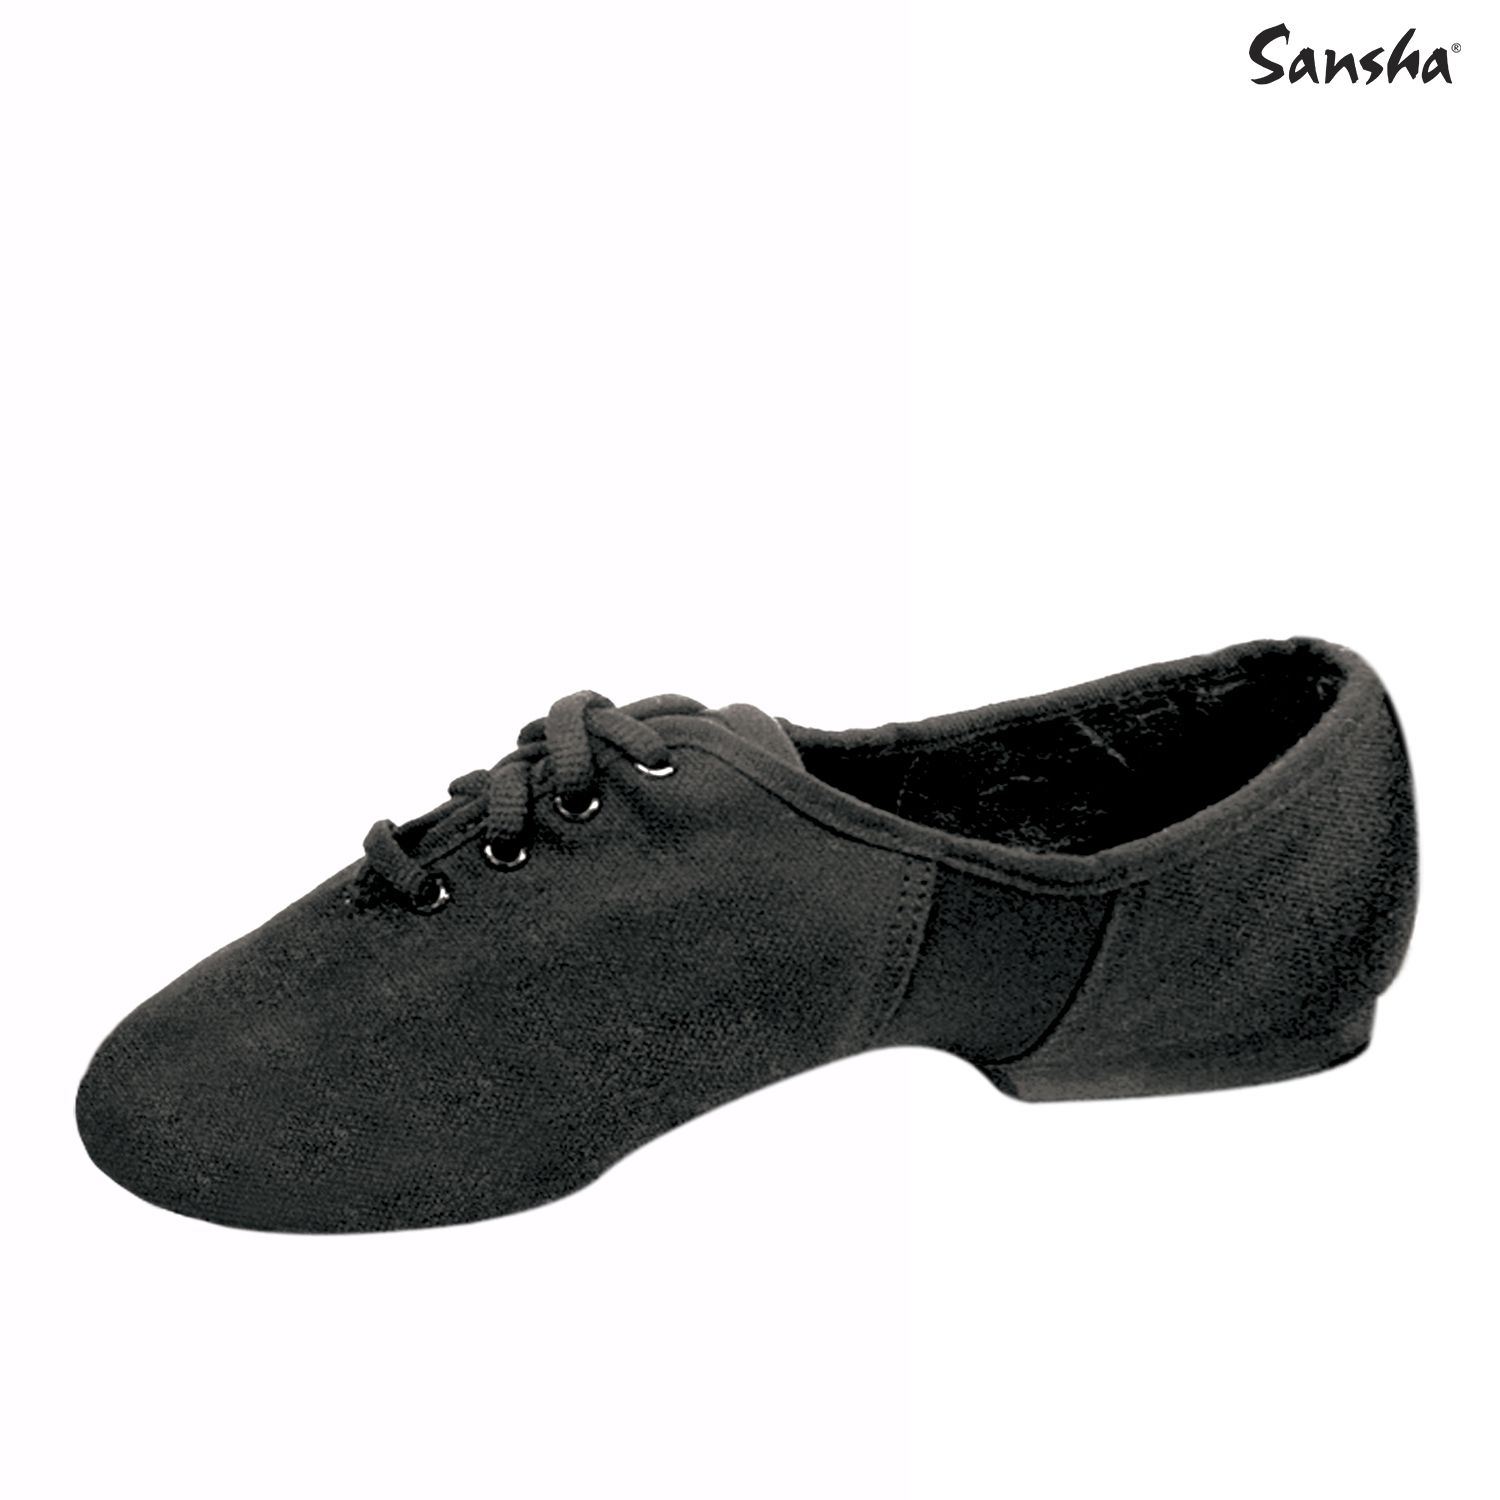 Buty do tańca Sansha model Tivoli